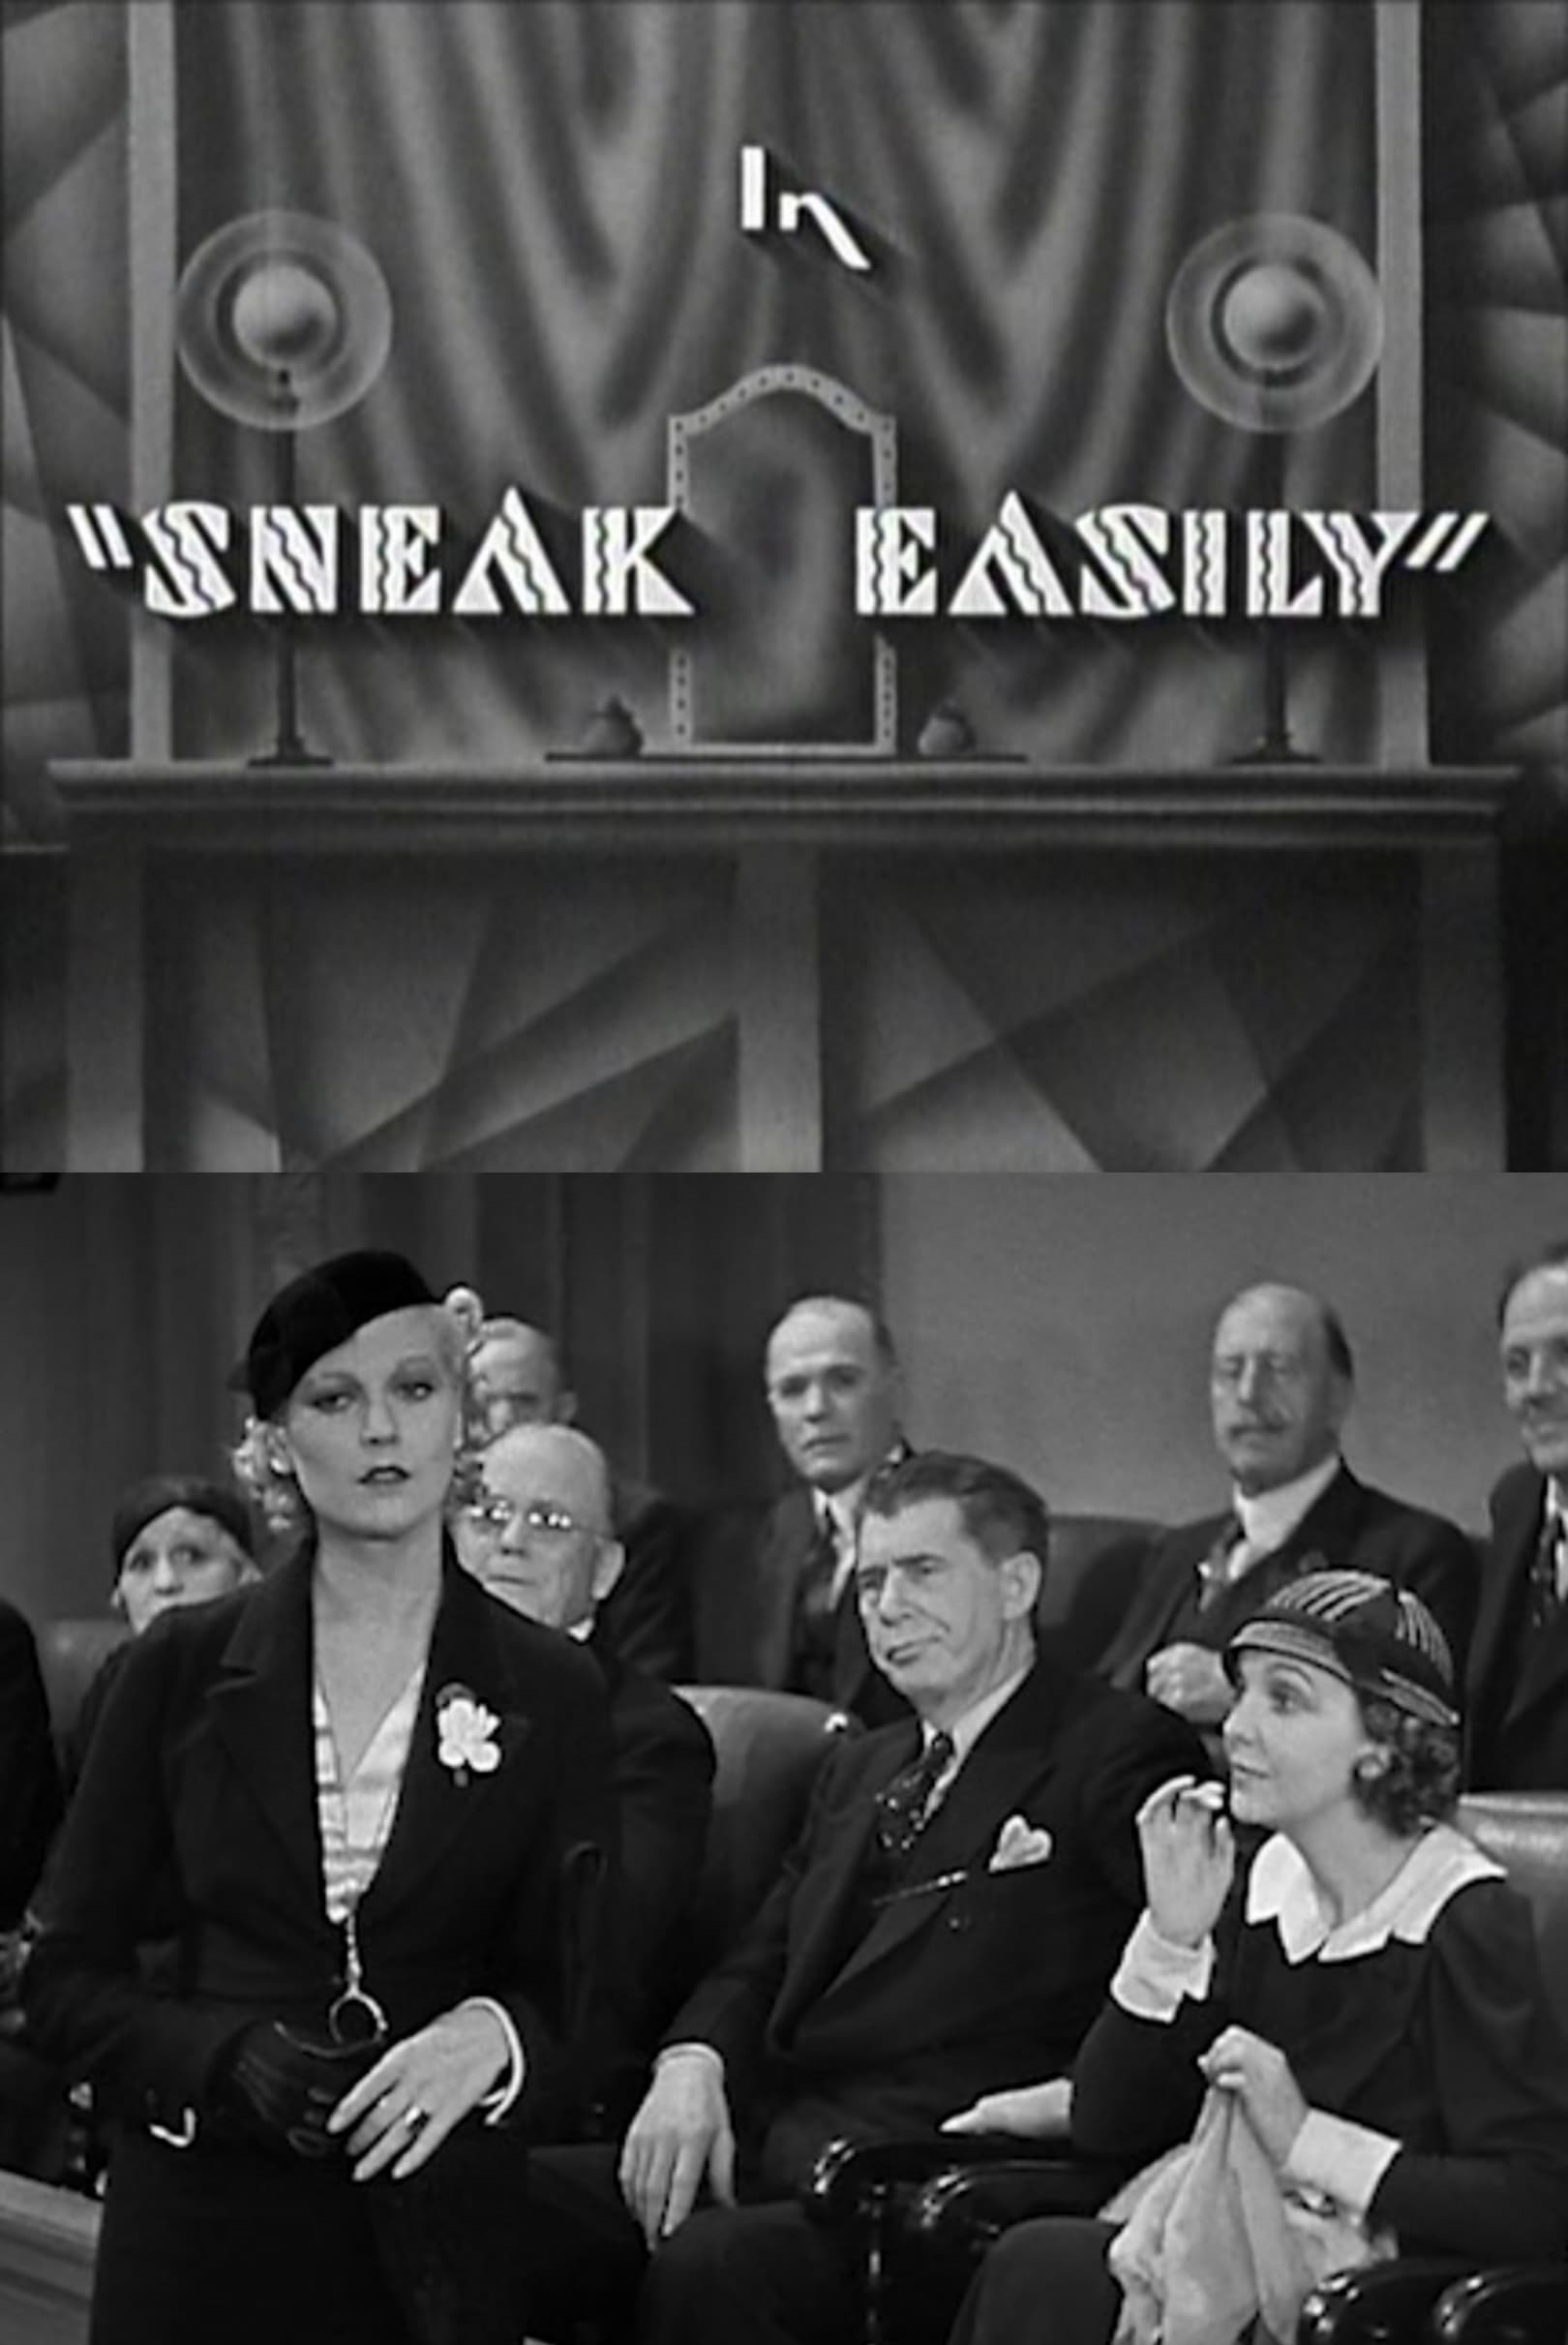 Sneak Easily (1932)